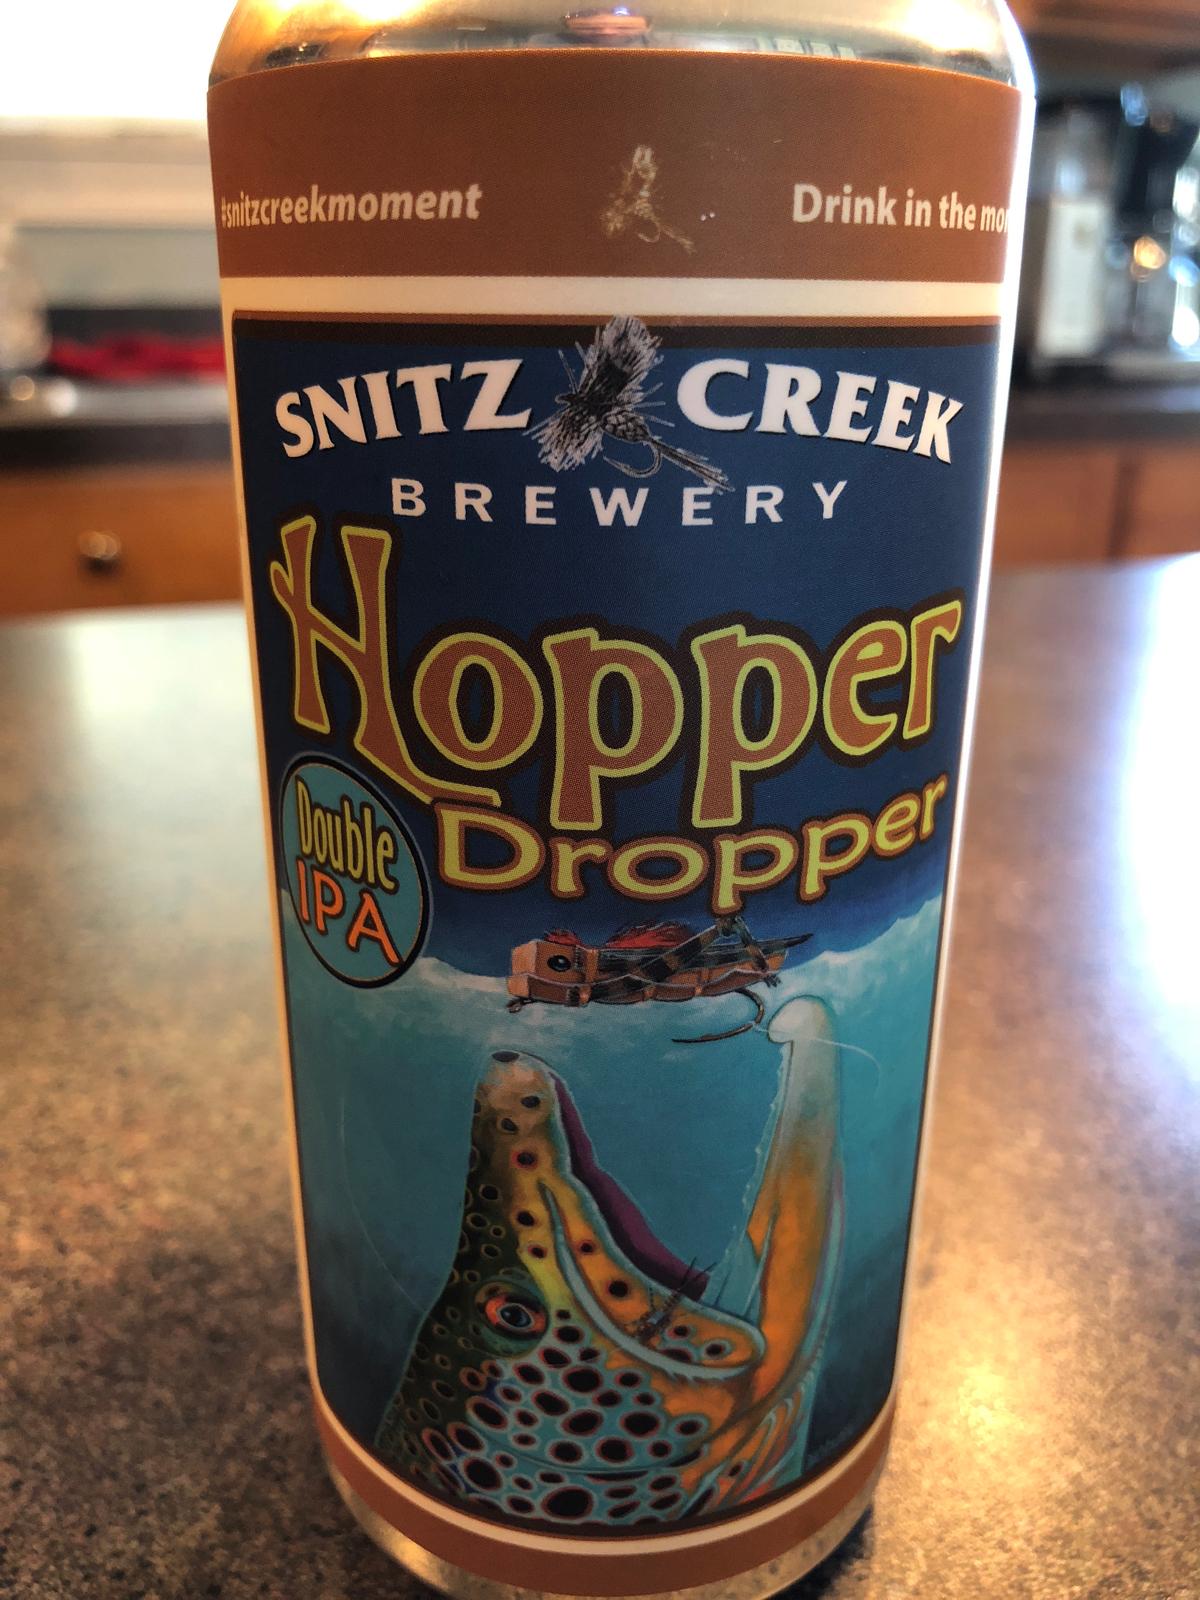 Hopper Dropper